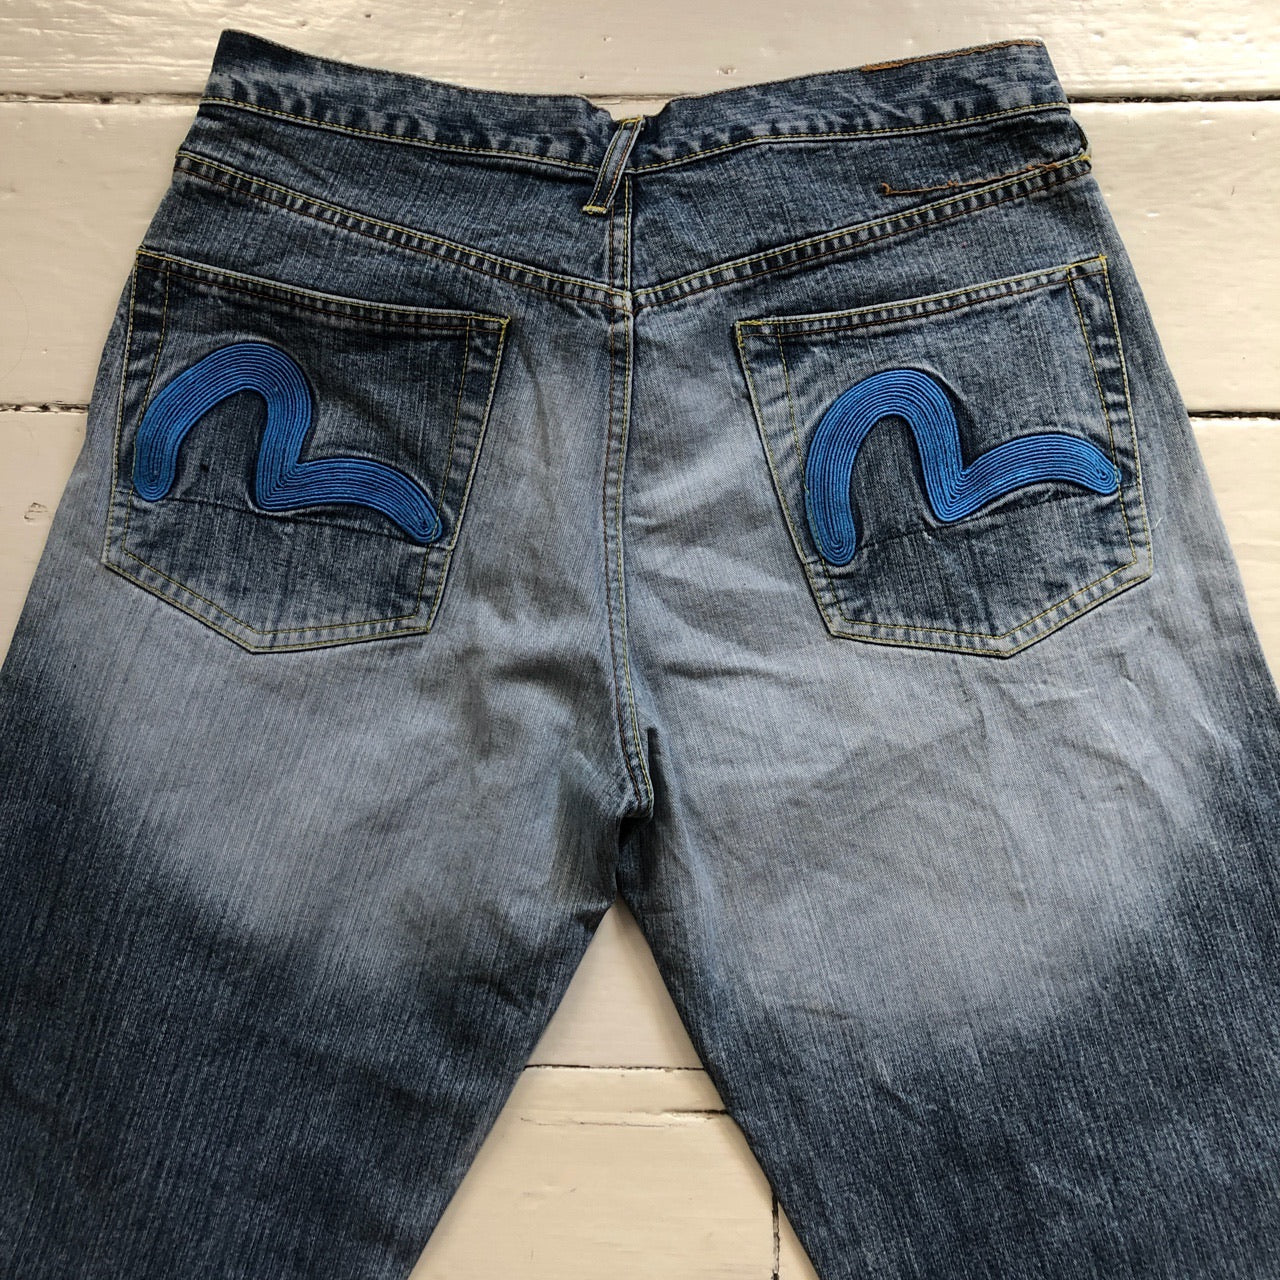 Evisu Vintage Blue Swoosh Jeans (36/30)